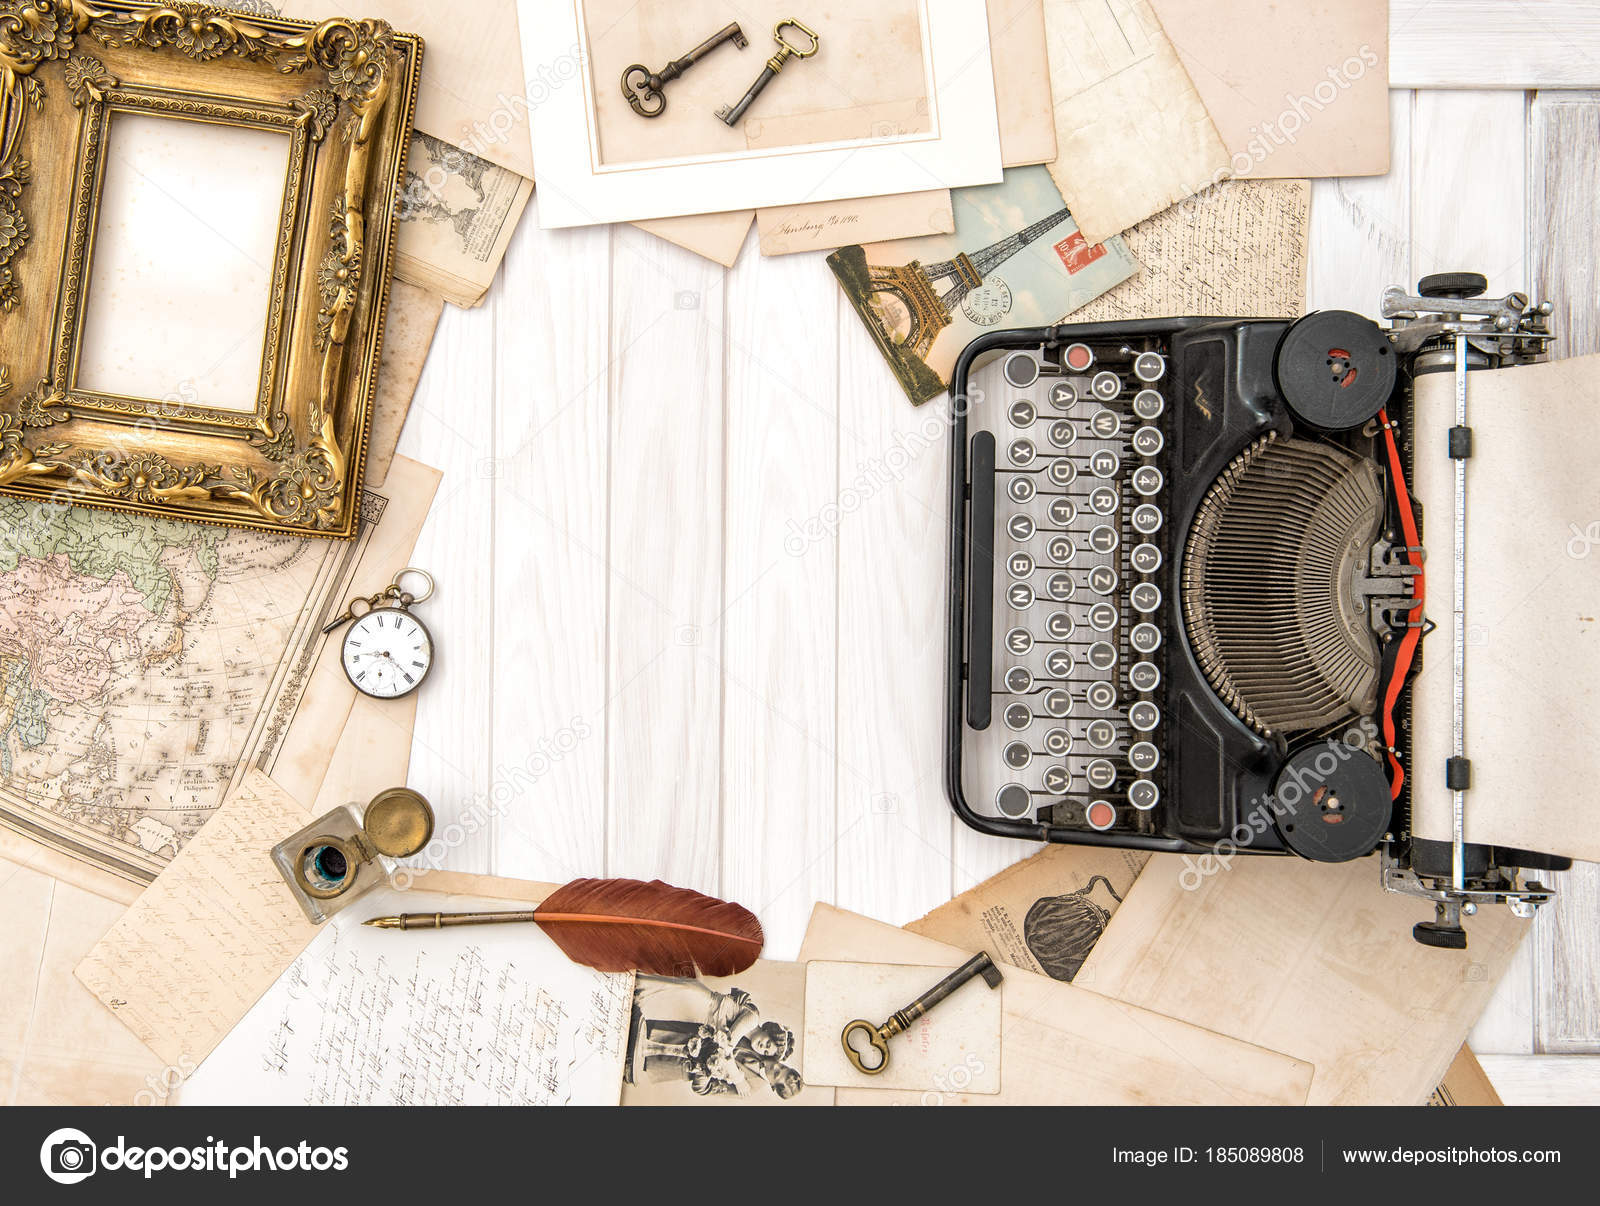 https://st3.depositphotos.com/1592314/18508/i/1600/depositphotos_185089808-stock-photo-antique-typewriter-vintage-office-accessories.jpg